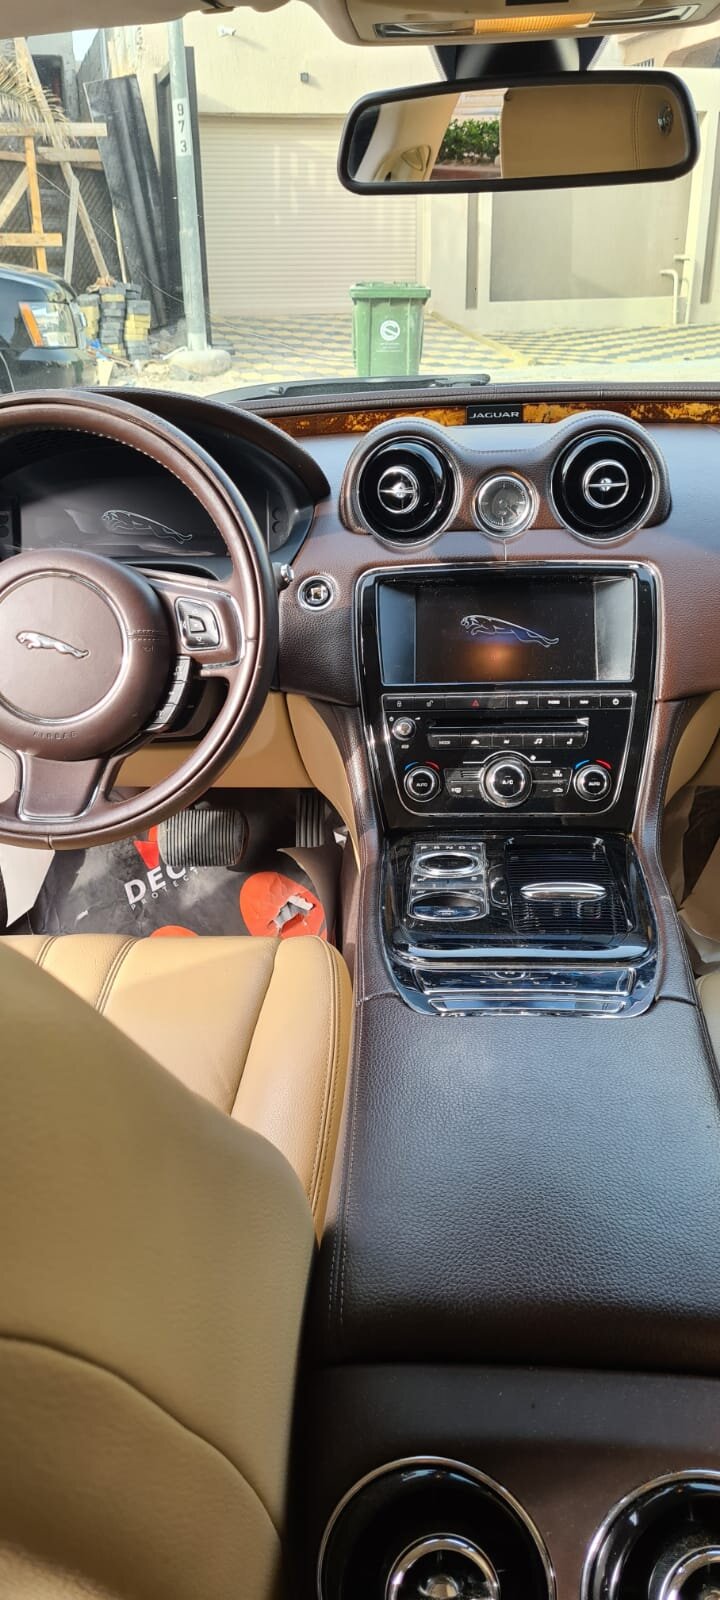 Jaguar xj 2014 جاكوار اكس جي ٢٠١٤5.jpeg